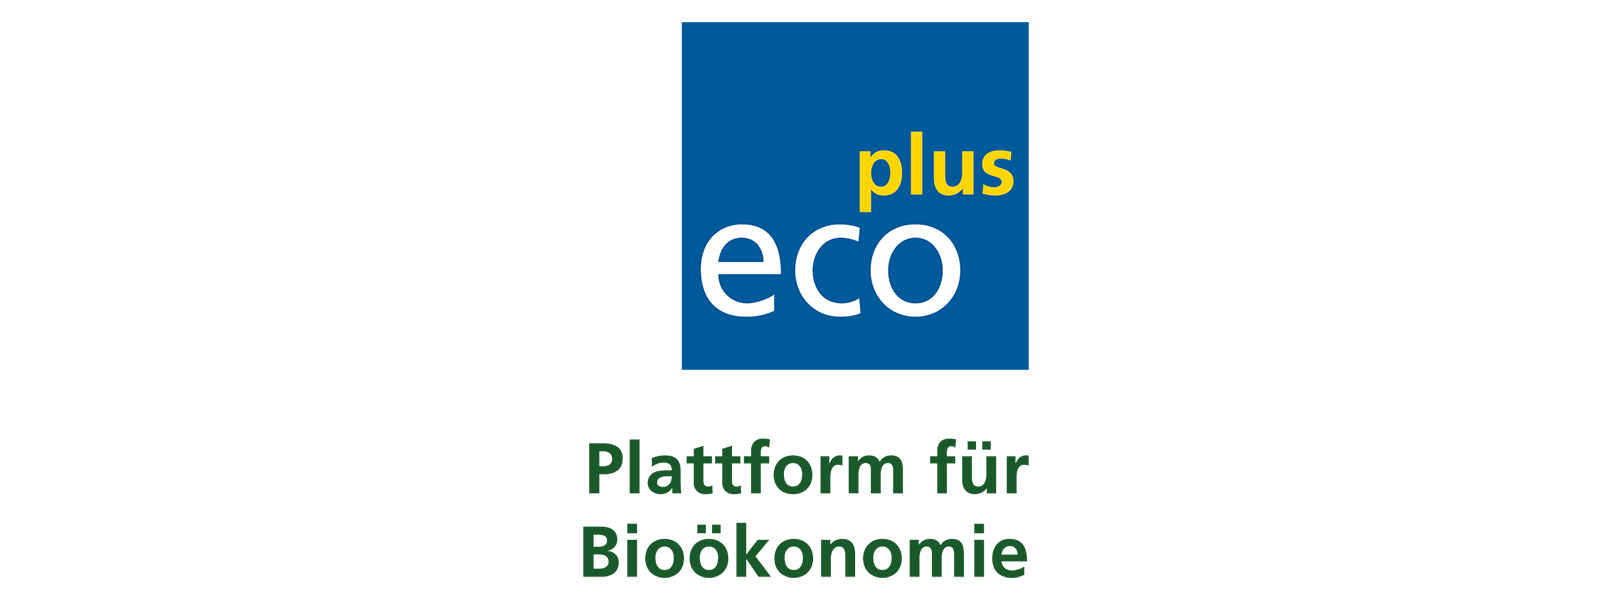 Plattform für Green Transformation & Bioökonomie